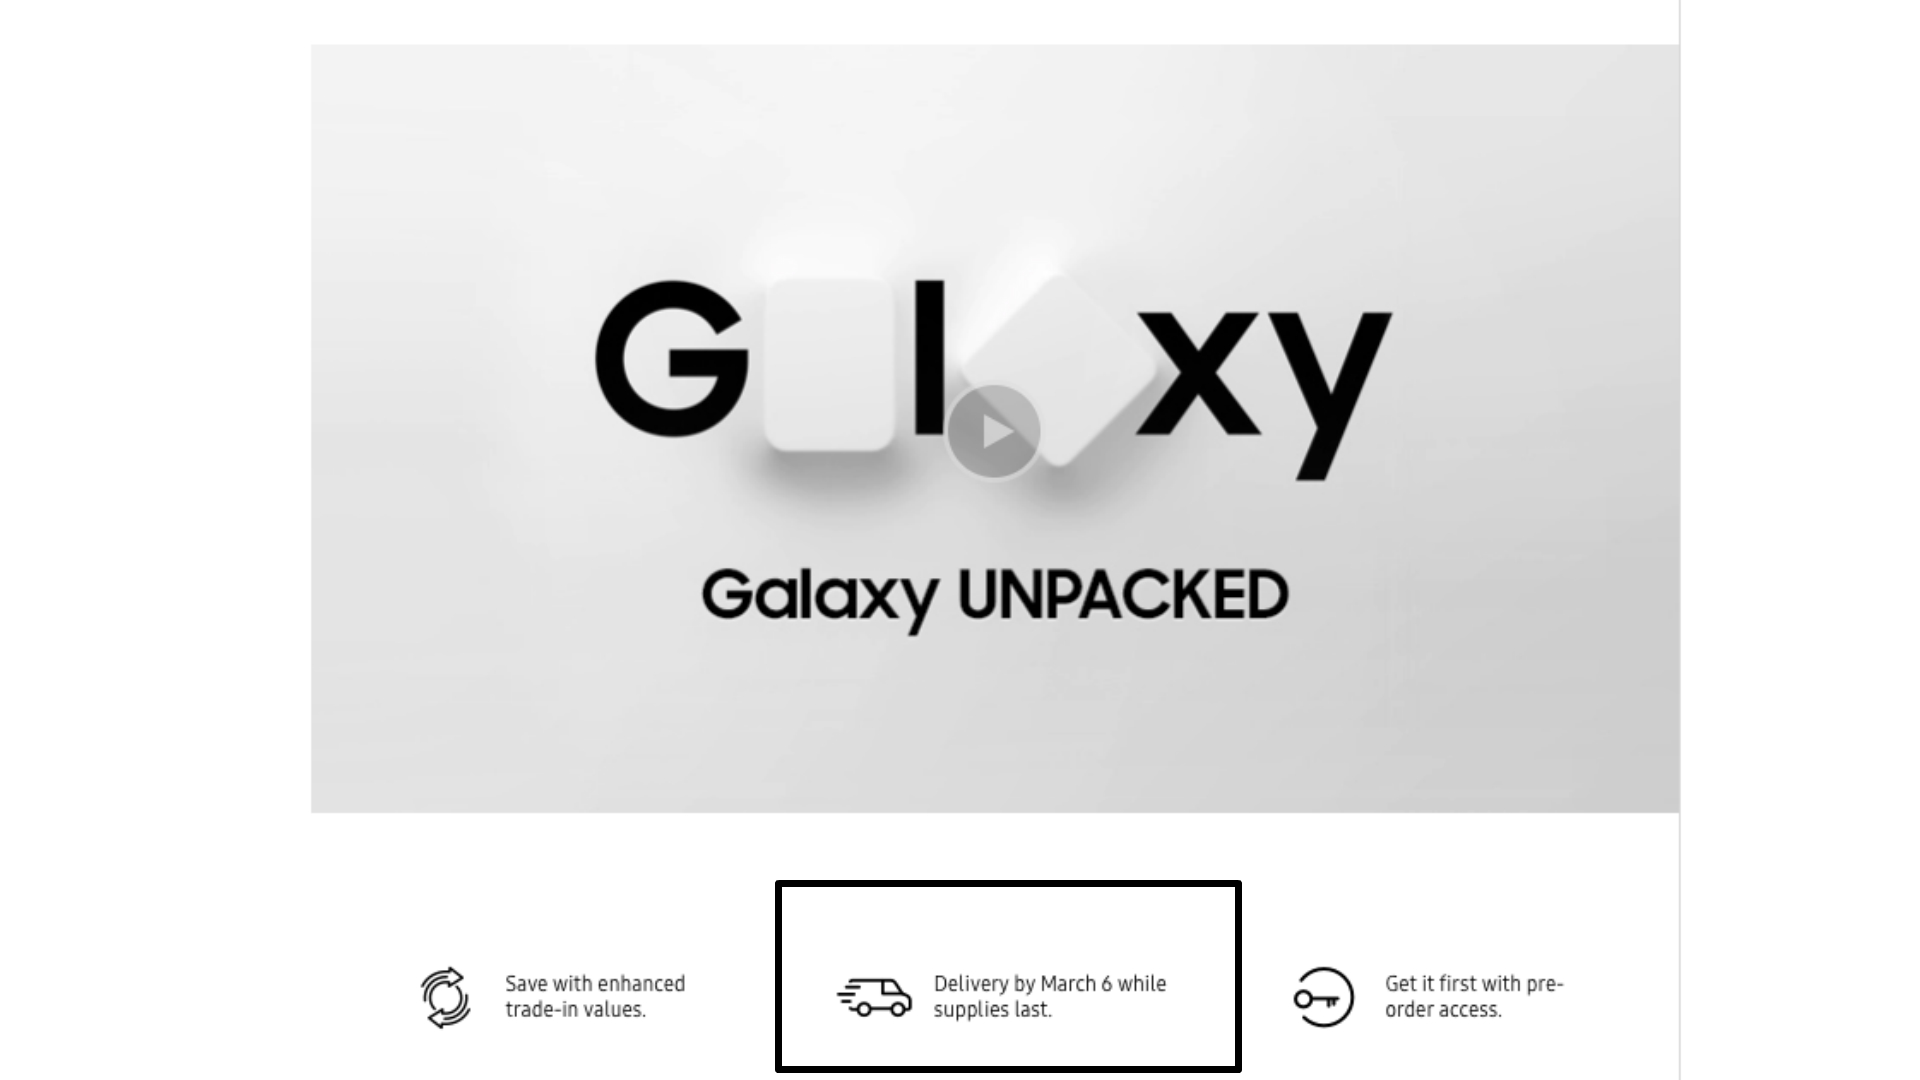 Samsung Galaxy S20 March 6 delivery